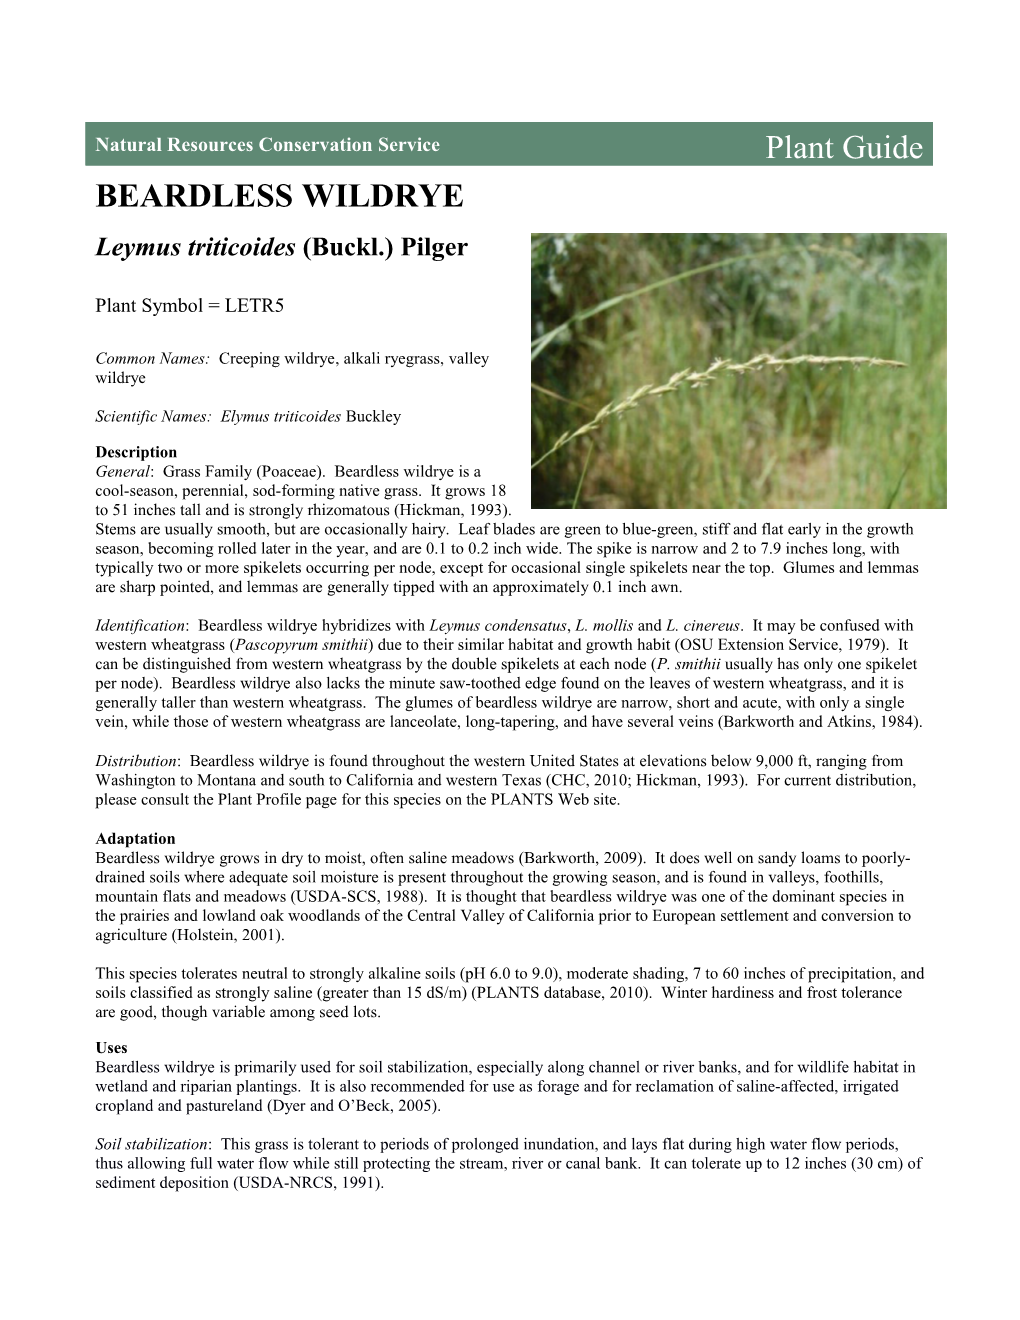 Beardless Wildrye (Leymus Triticoides) Plant Guide